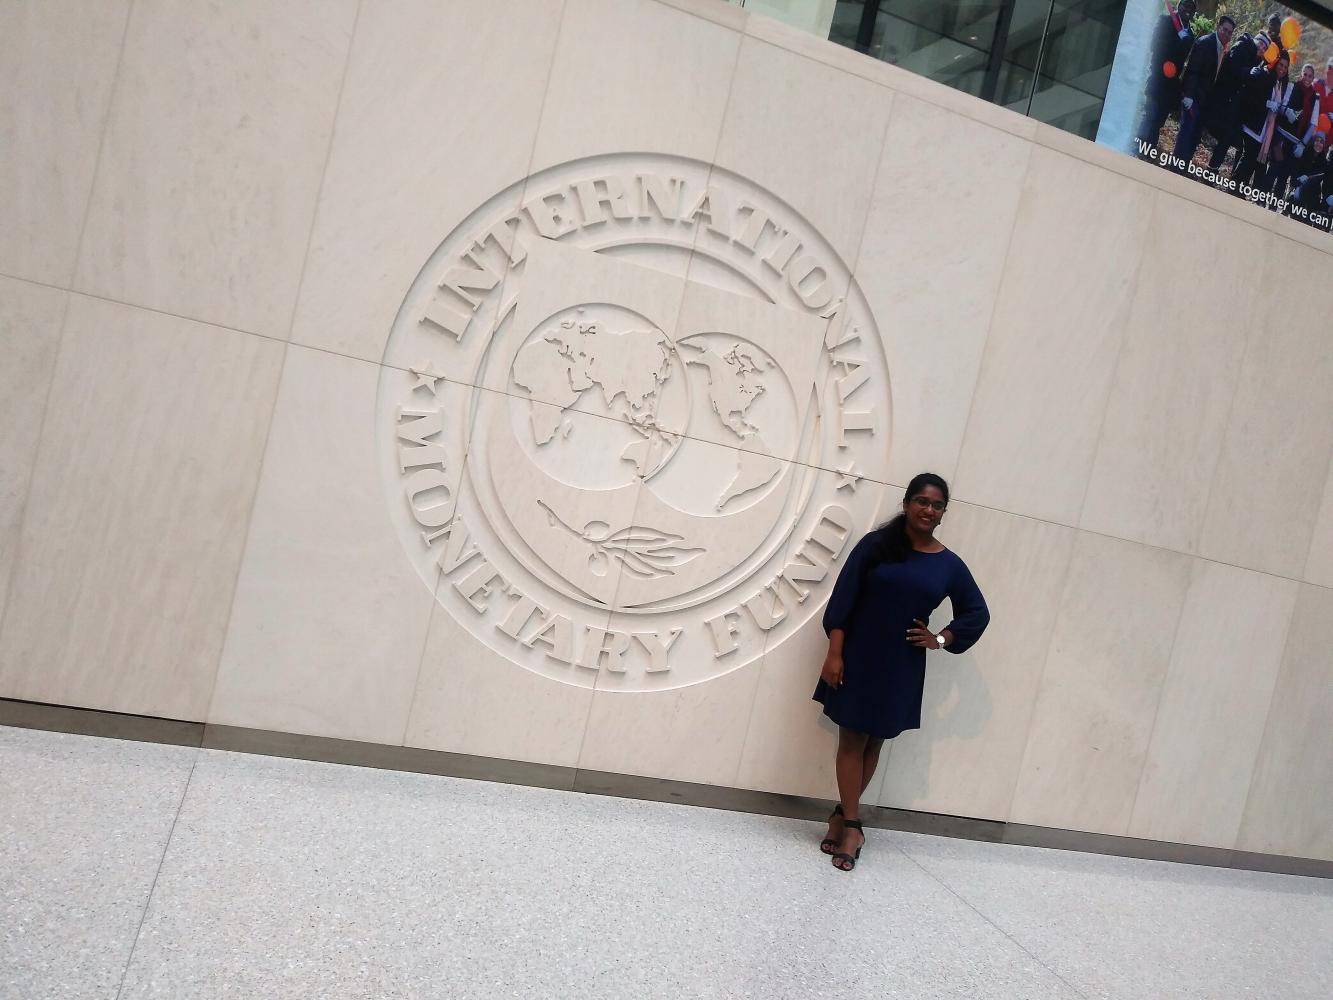 Development Fellow Hansani Chapa Perera in front of the International Monetary Fund emblem